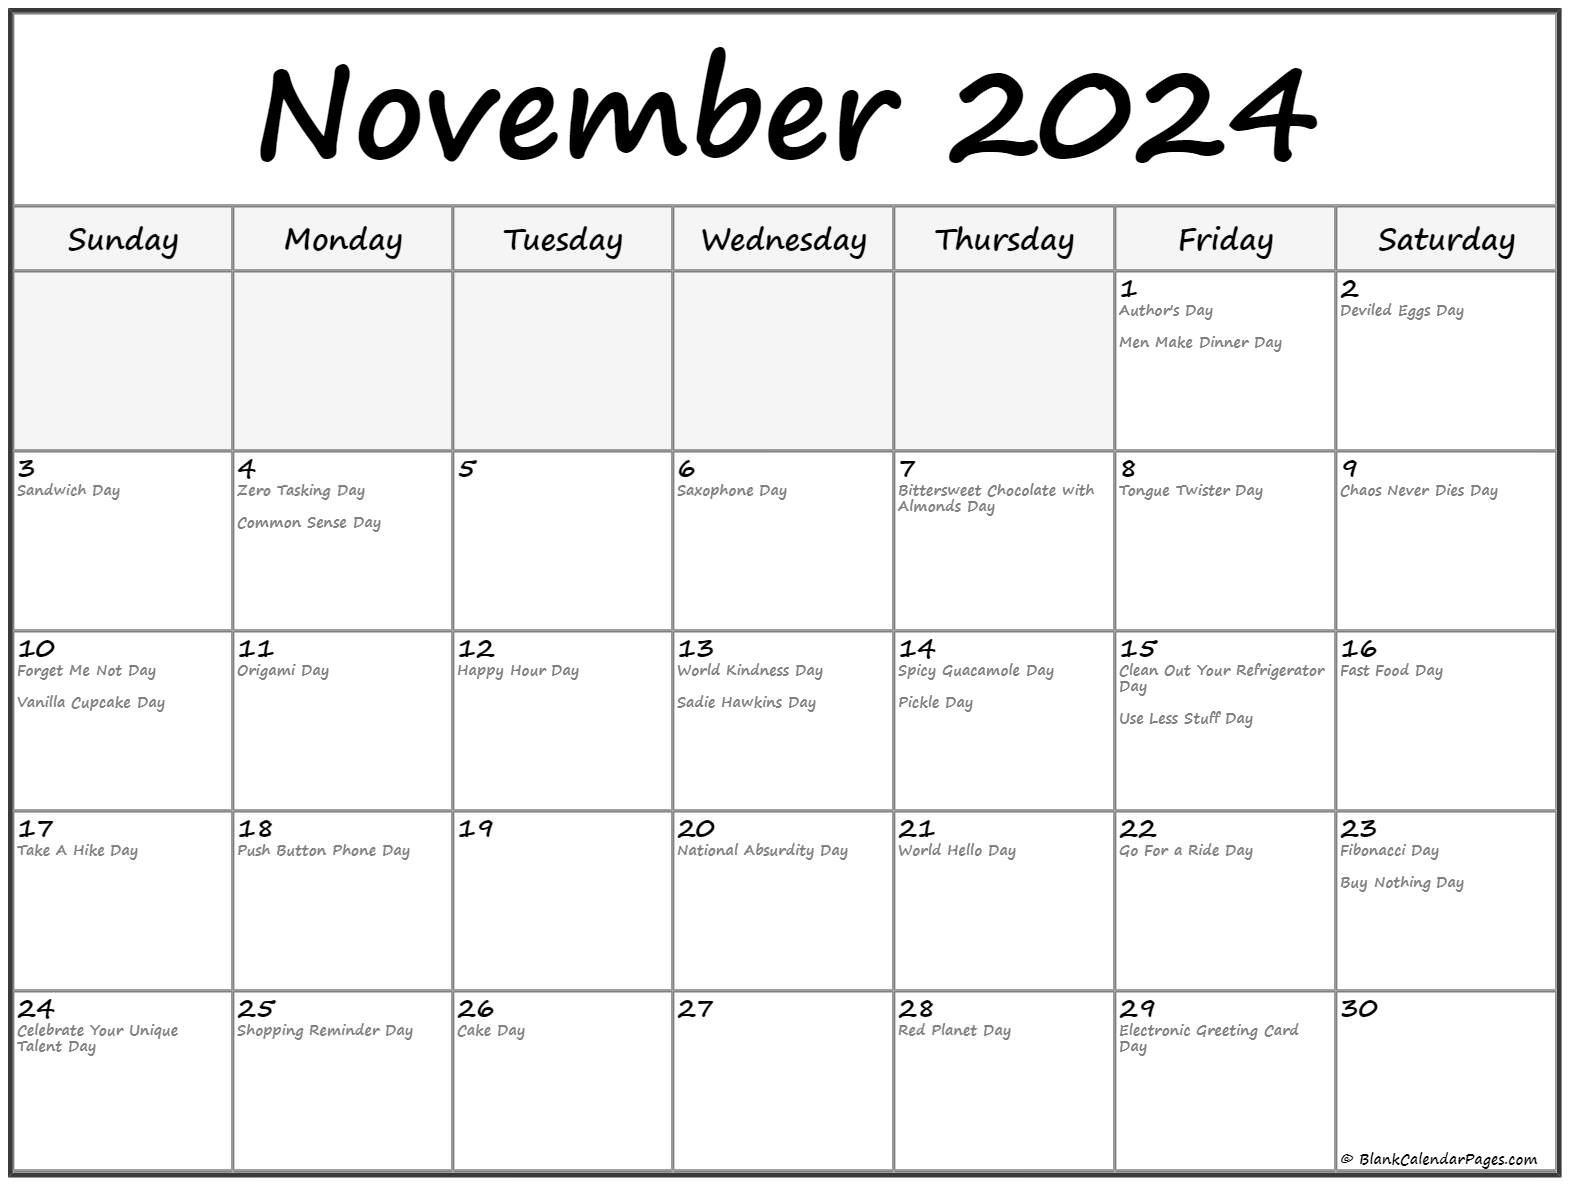 November 2022 calendar with holidays